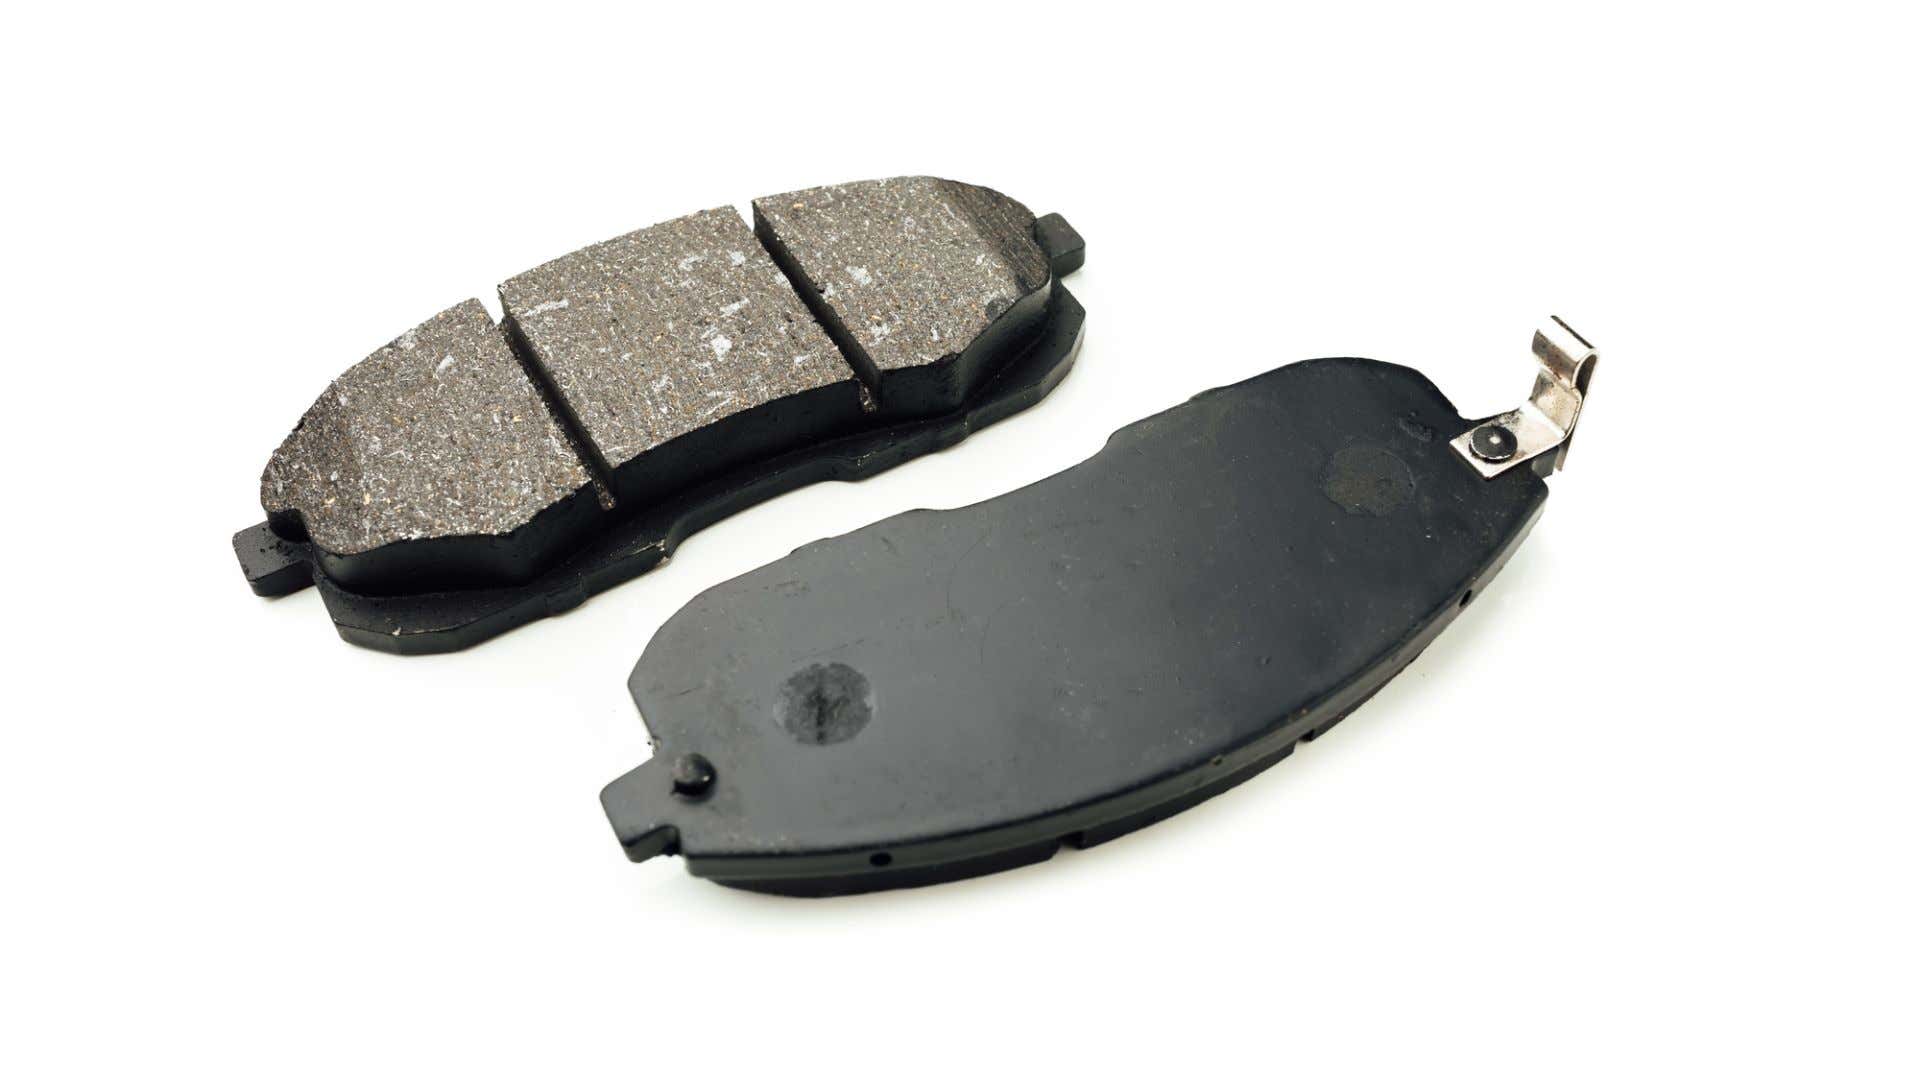 A set of brake pads.